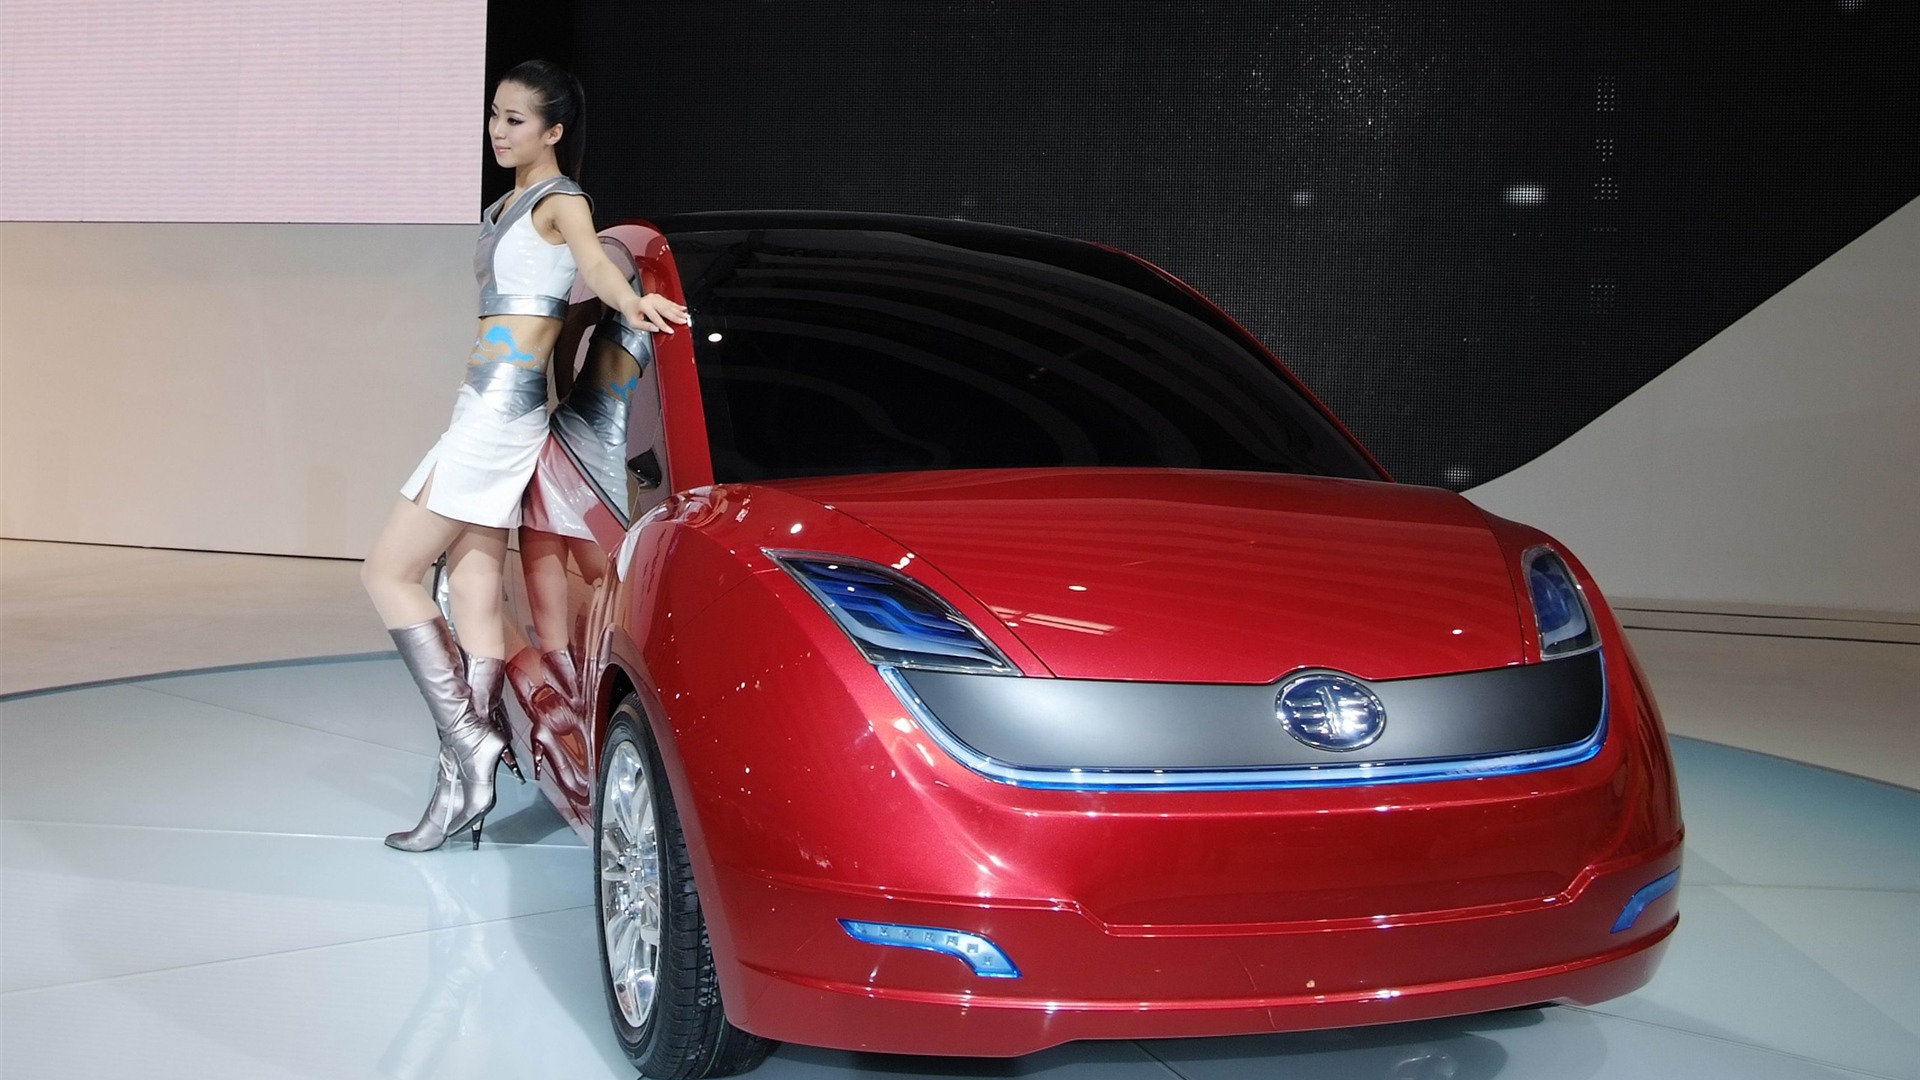 2010 Salón Internacional del Automóvil de Beijing Heung Che belleza (obras barras de refuerzo) #24 - 1920x1080